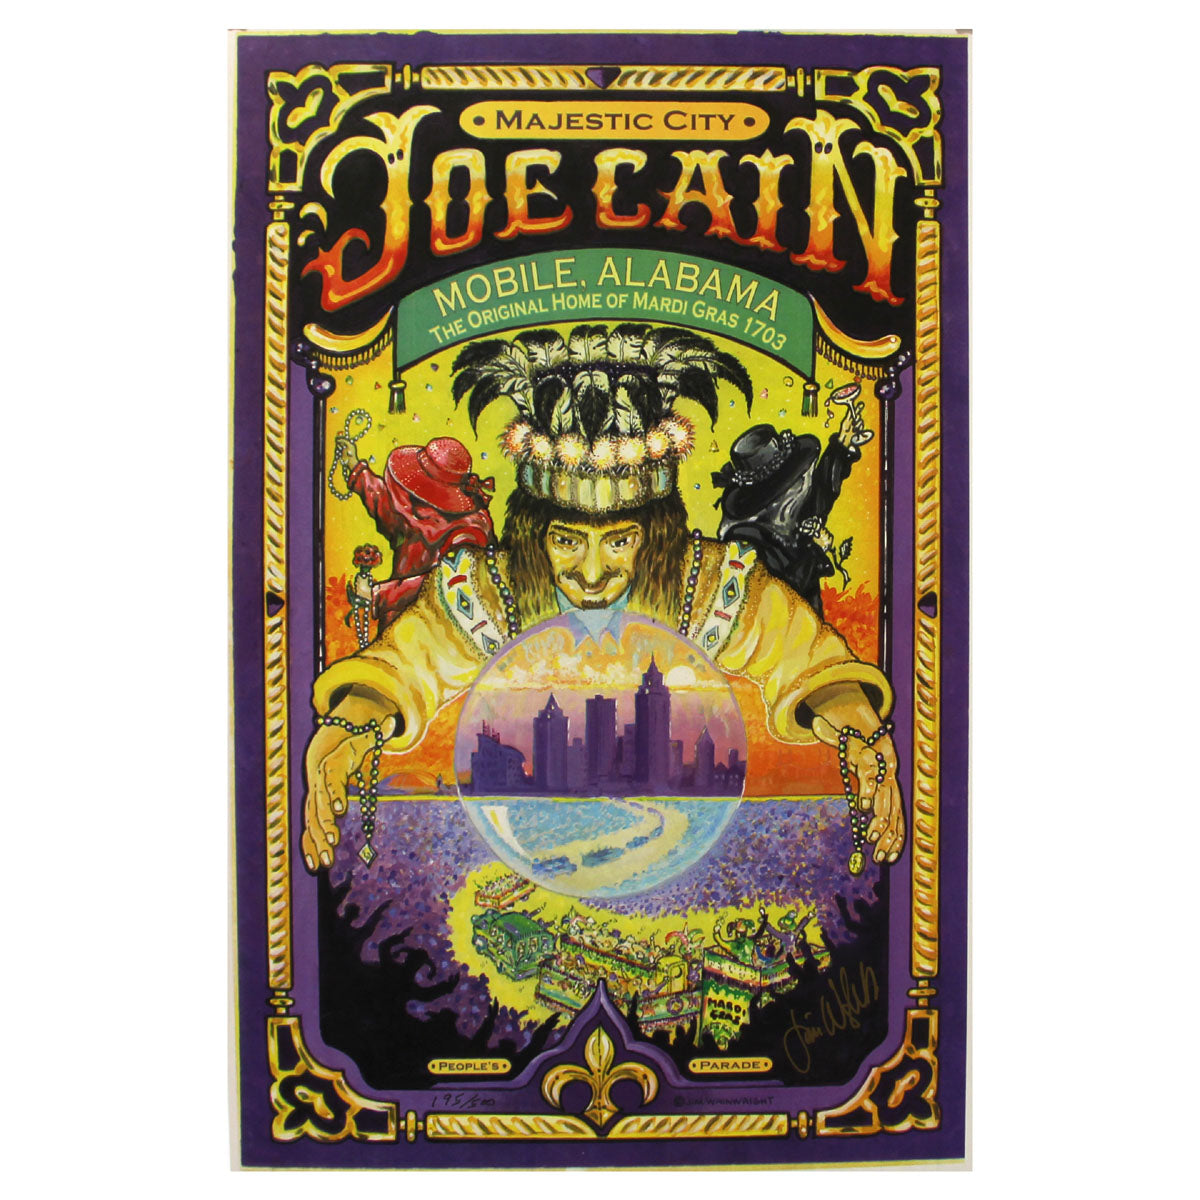 2009 Joe Cain Majestic City